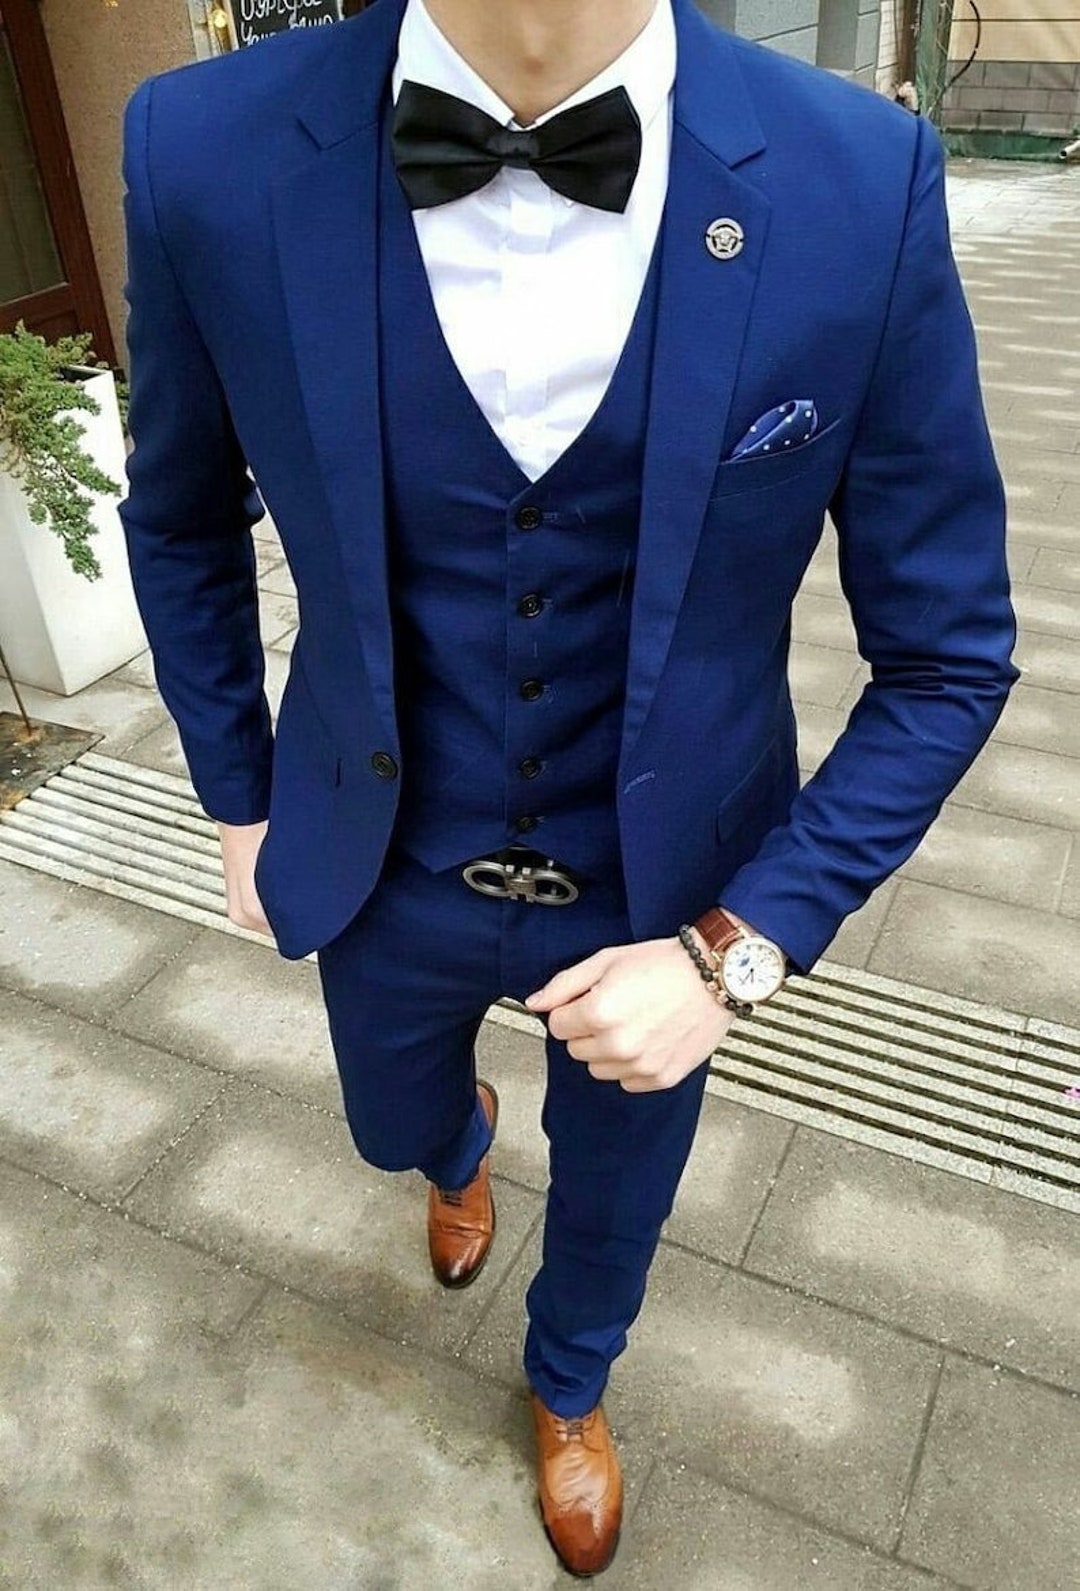 MEN FORMAL WEAR Men Suit Wedding Attire Suit Three Piece - Etsy